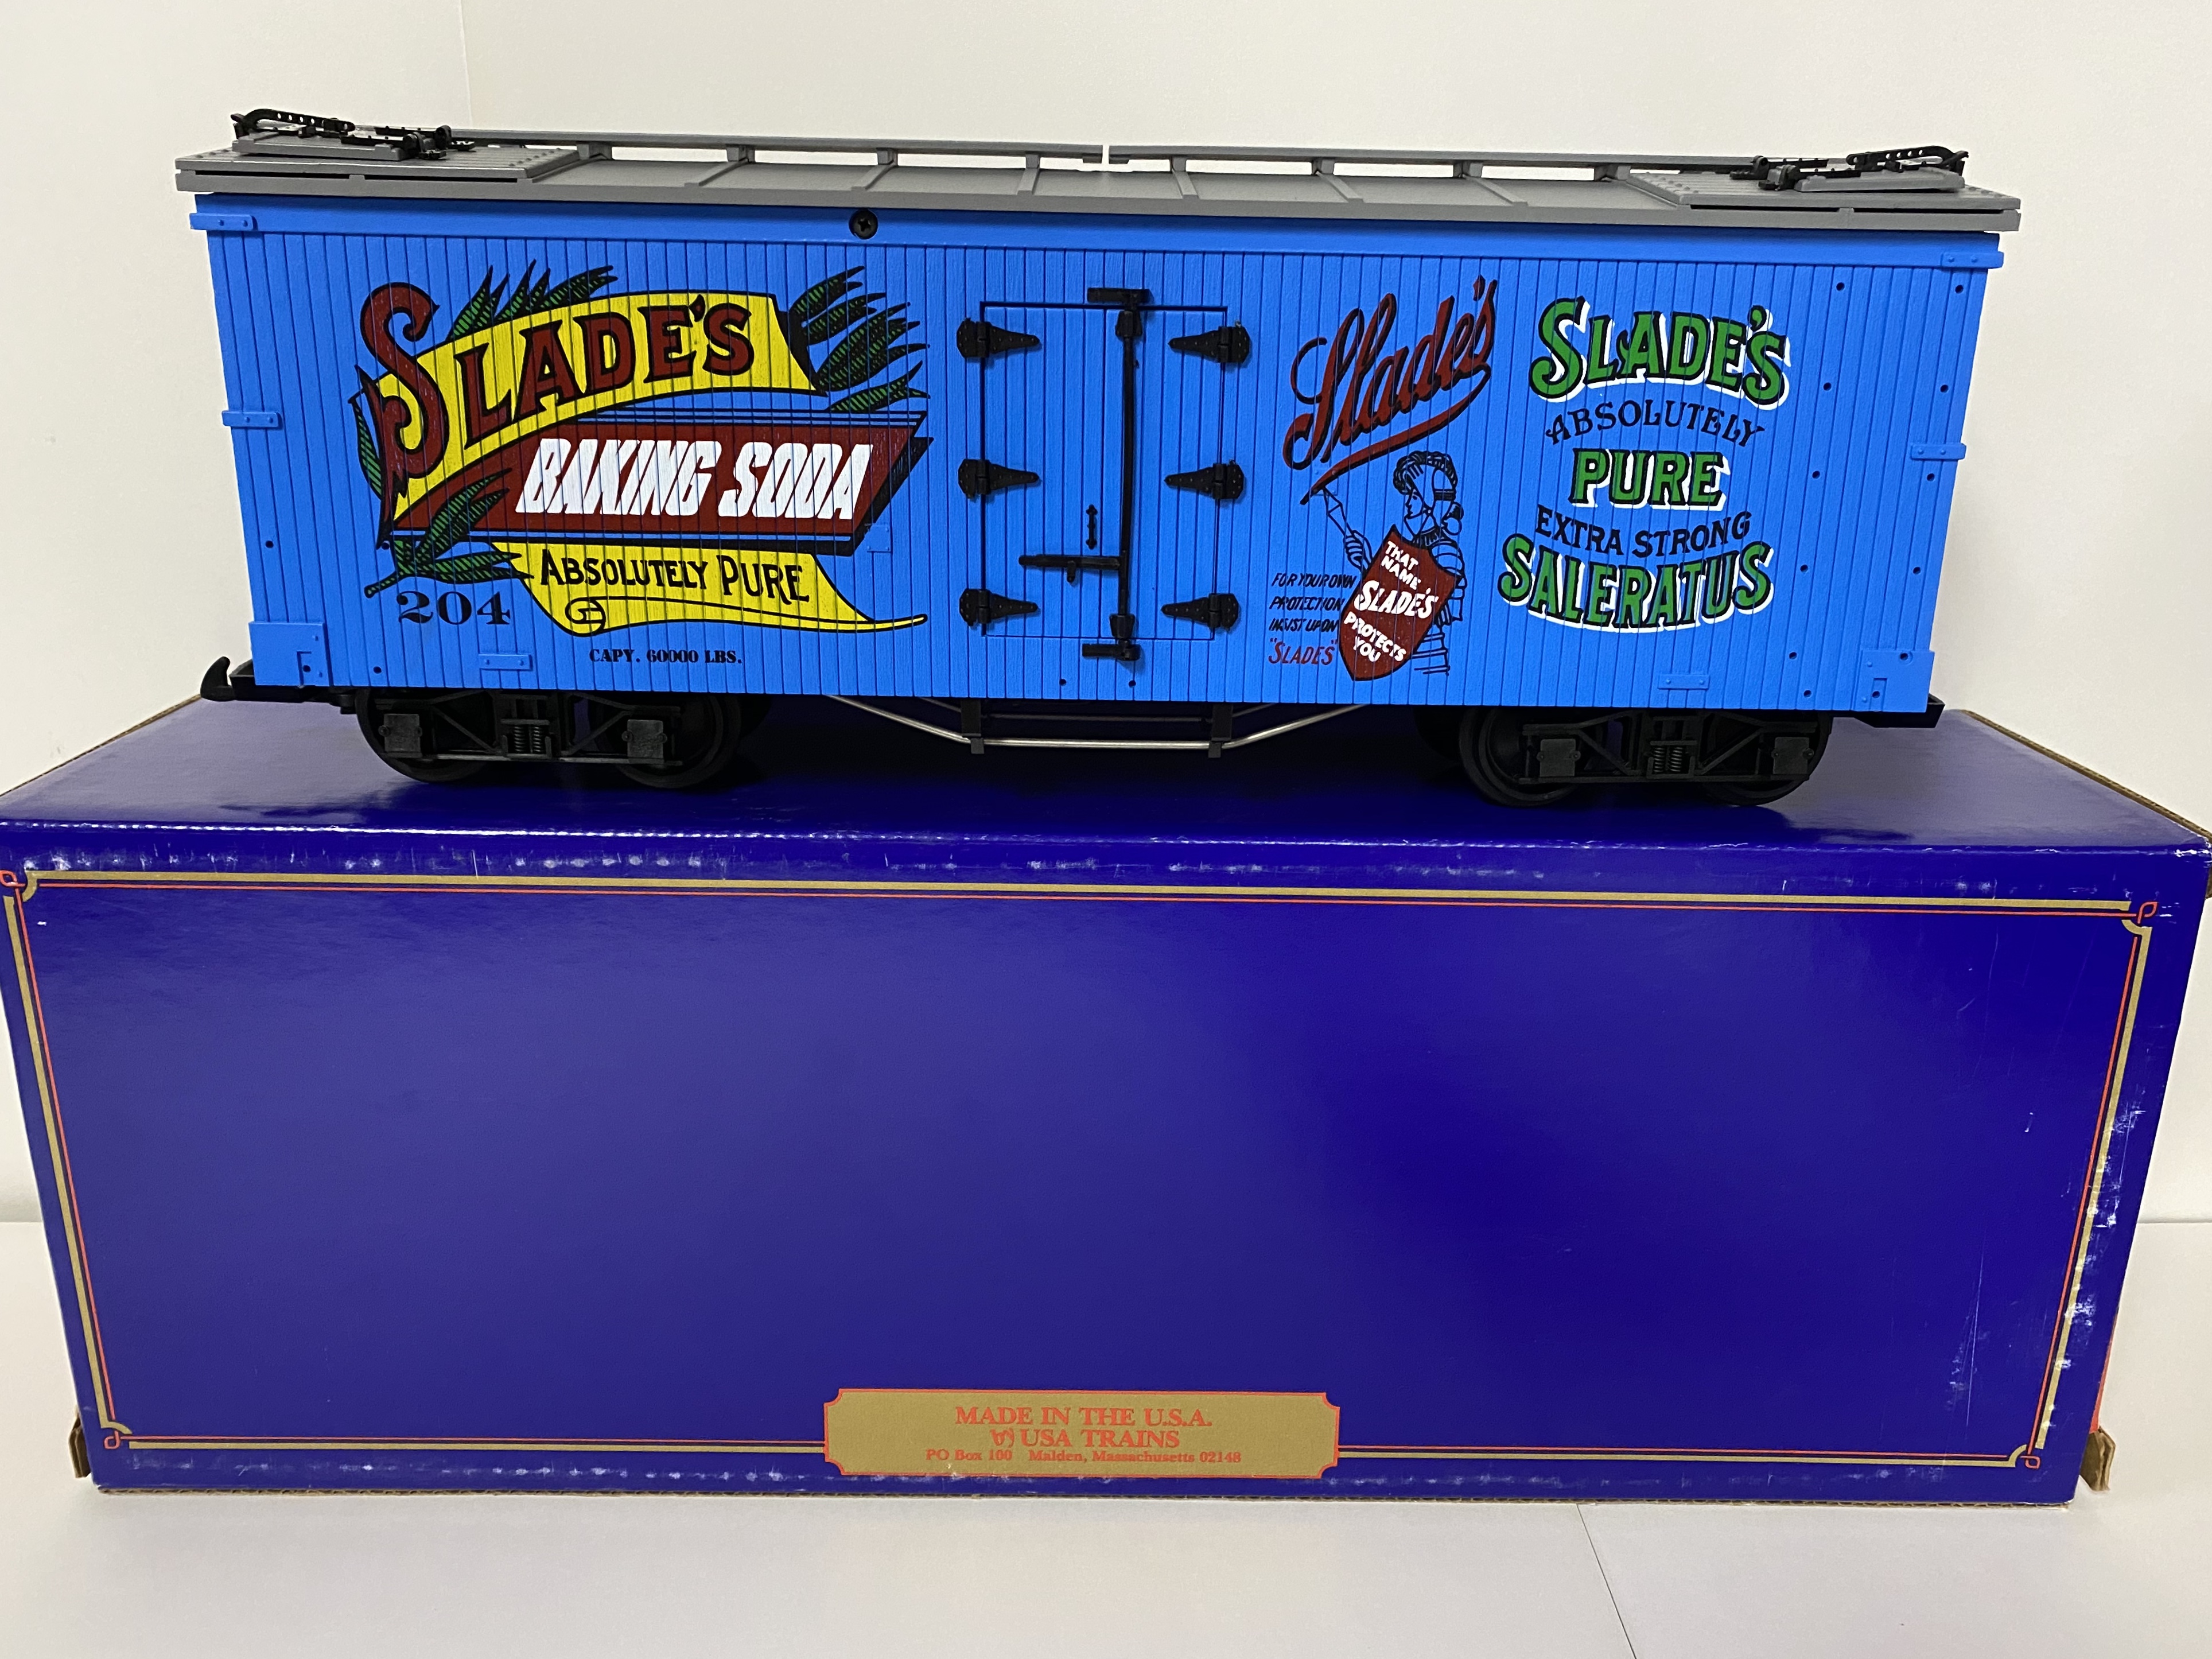 Slade's Reefer (USA Trains R-1670)